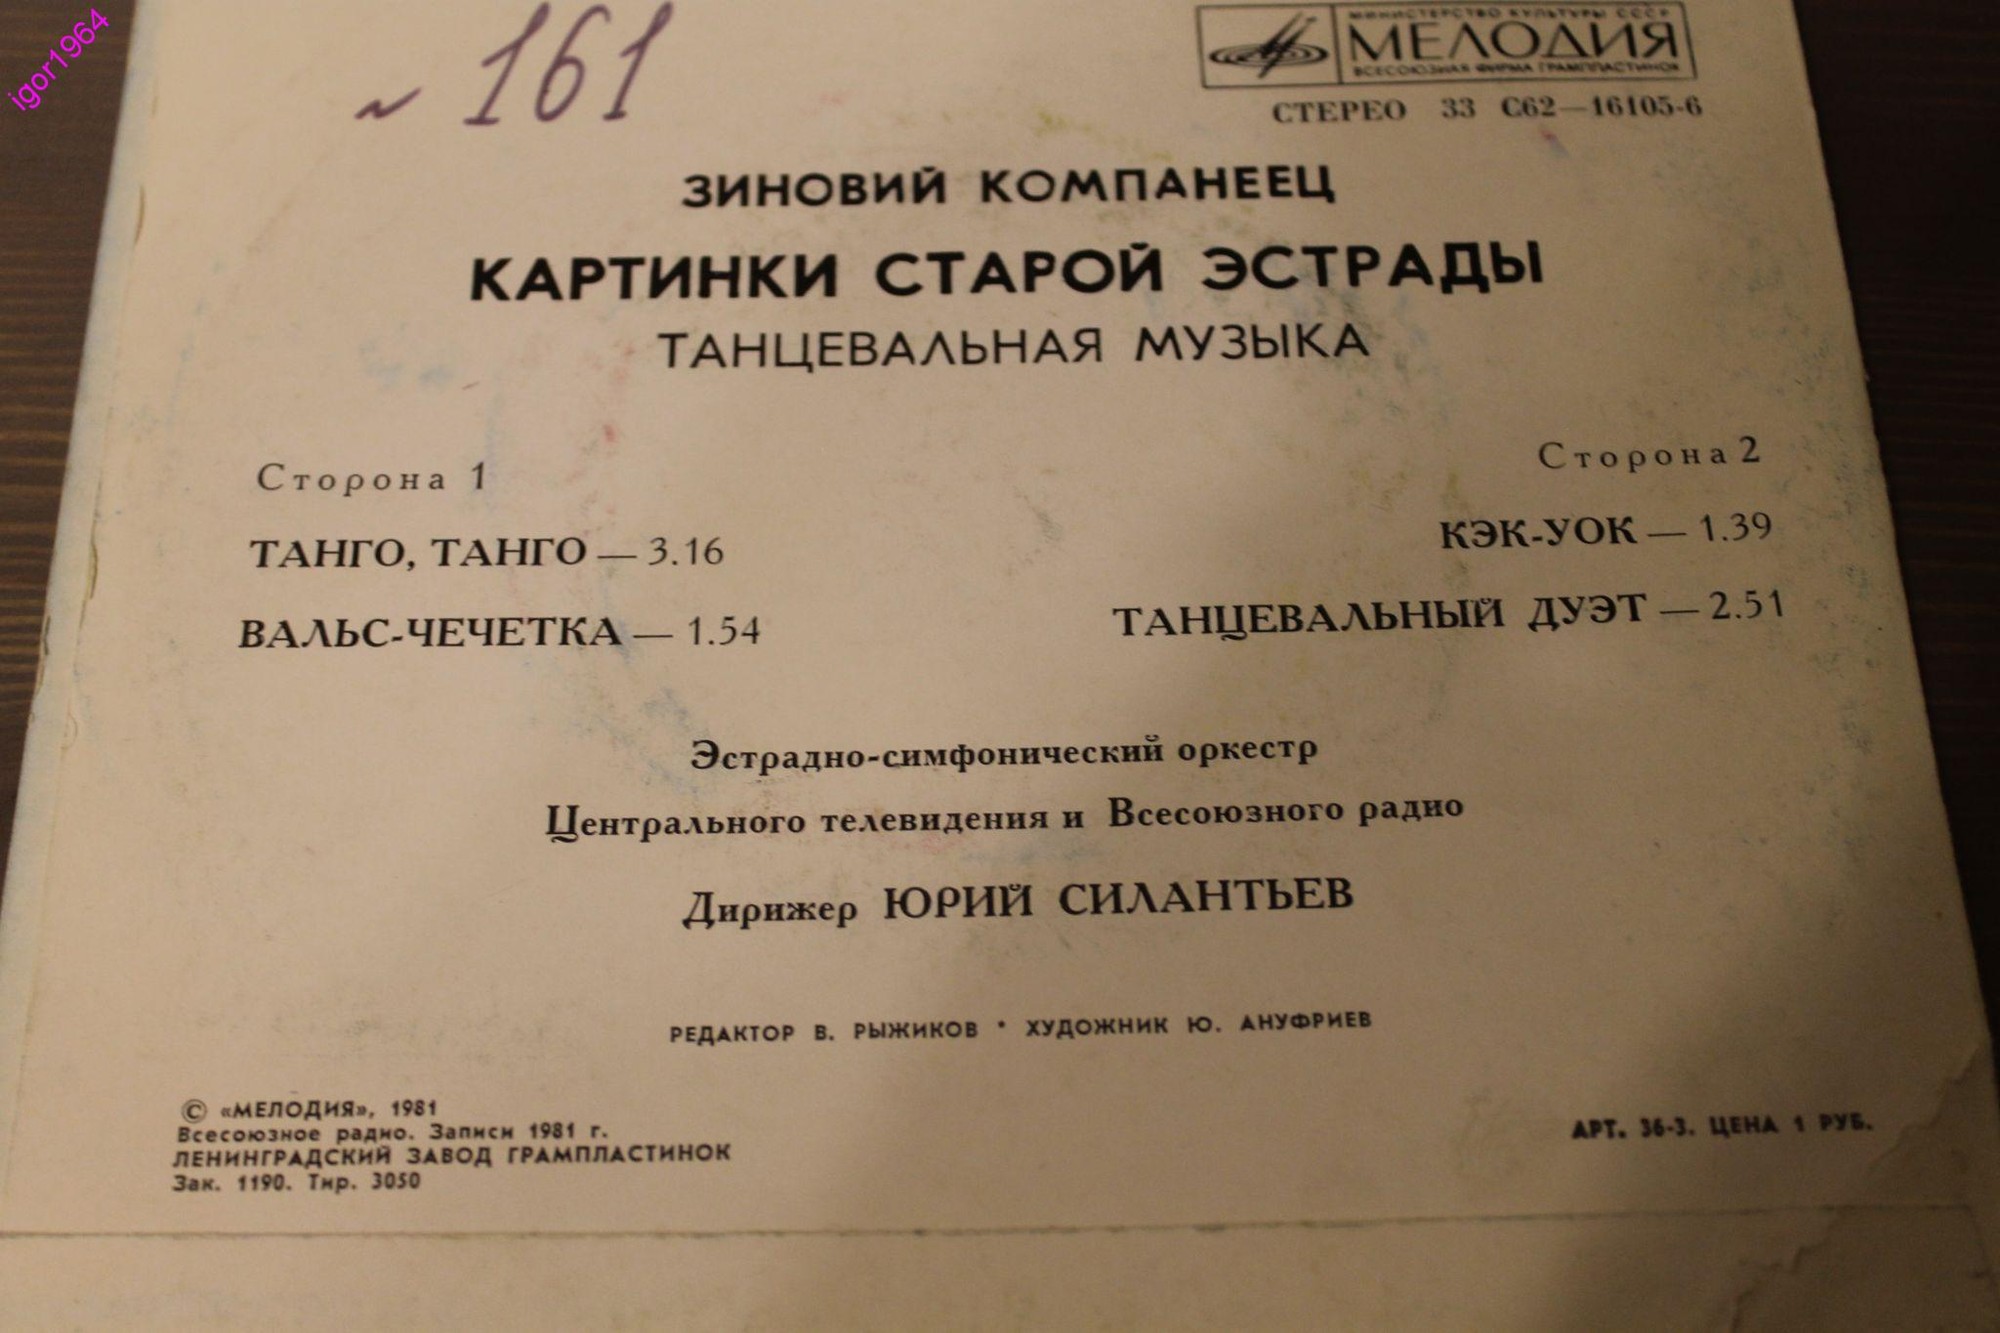 З. КОМПАНЕЕЦ (1902): «Картинки старой эстрады» (танцевальная музыка).